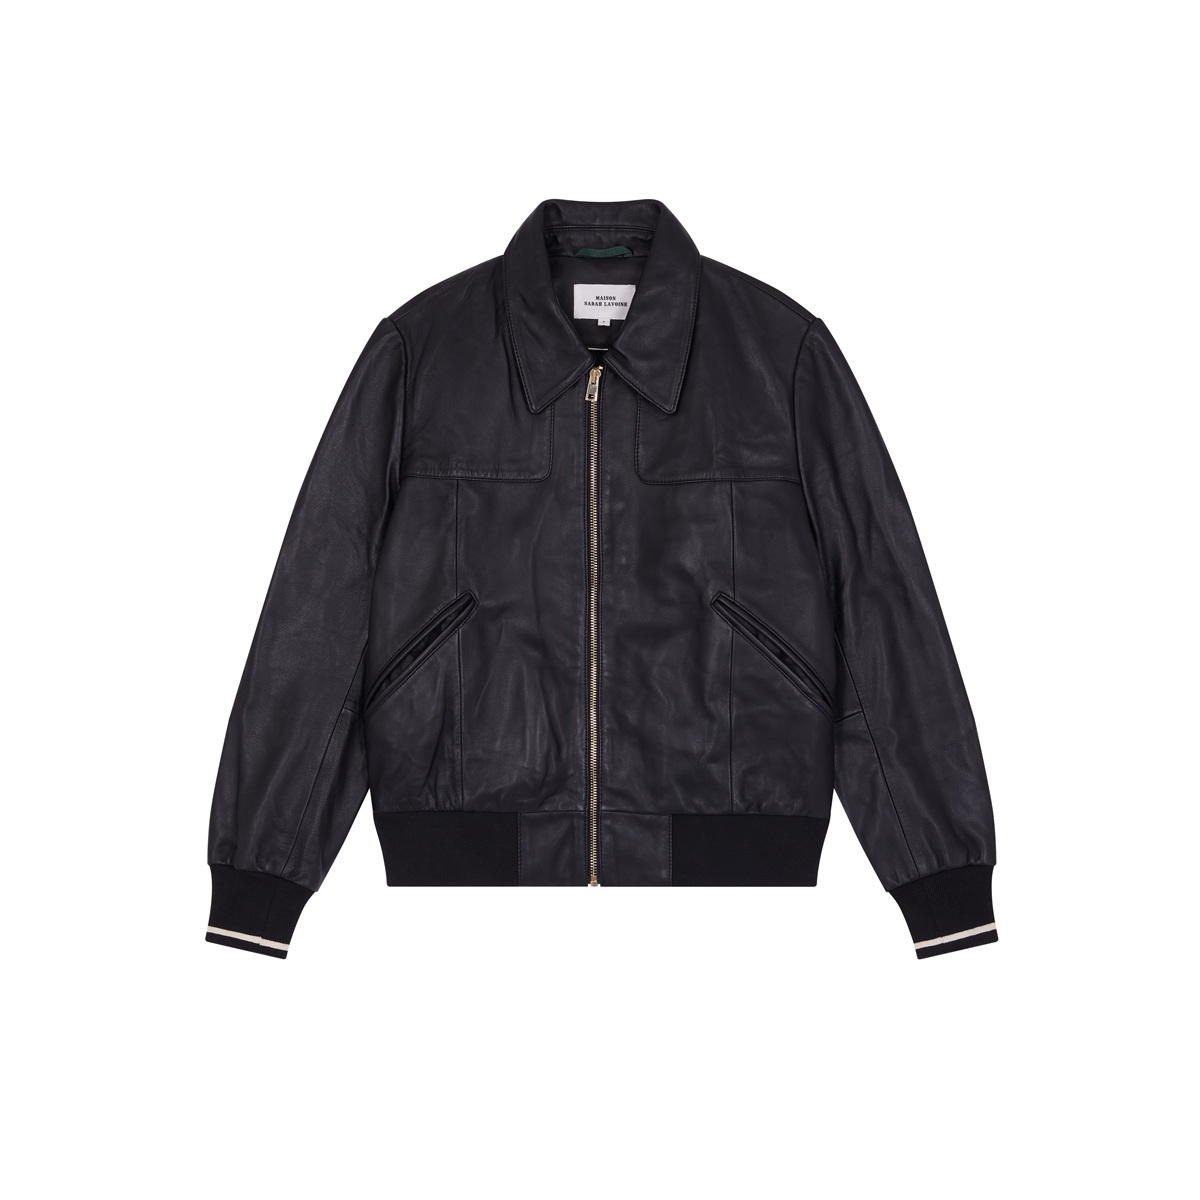 Chester leather jacket, Black - image 1